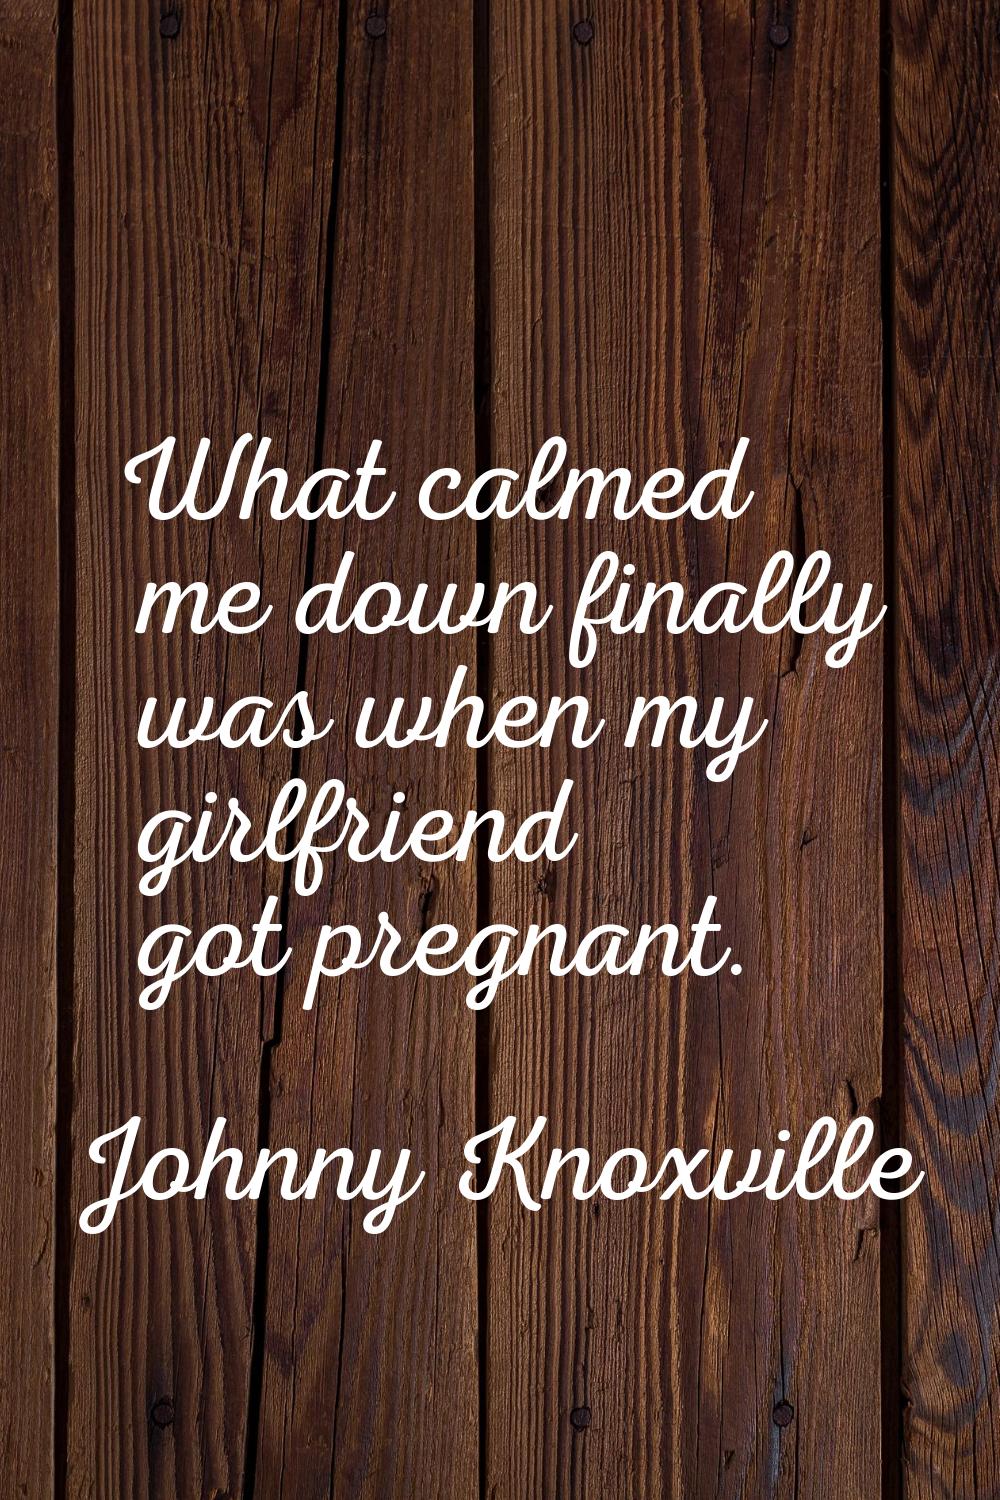 What calmed me down finally was when my girlfriend got pregnant.